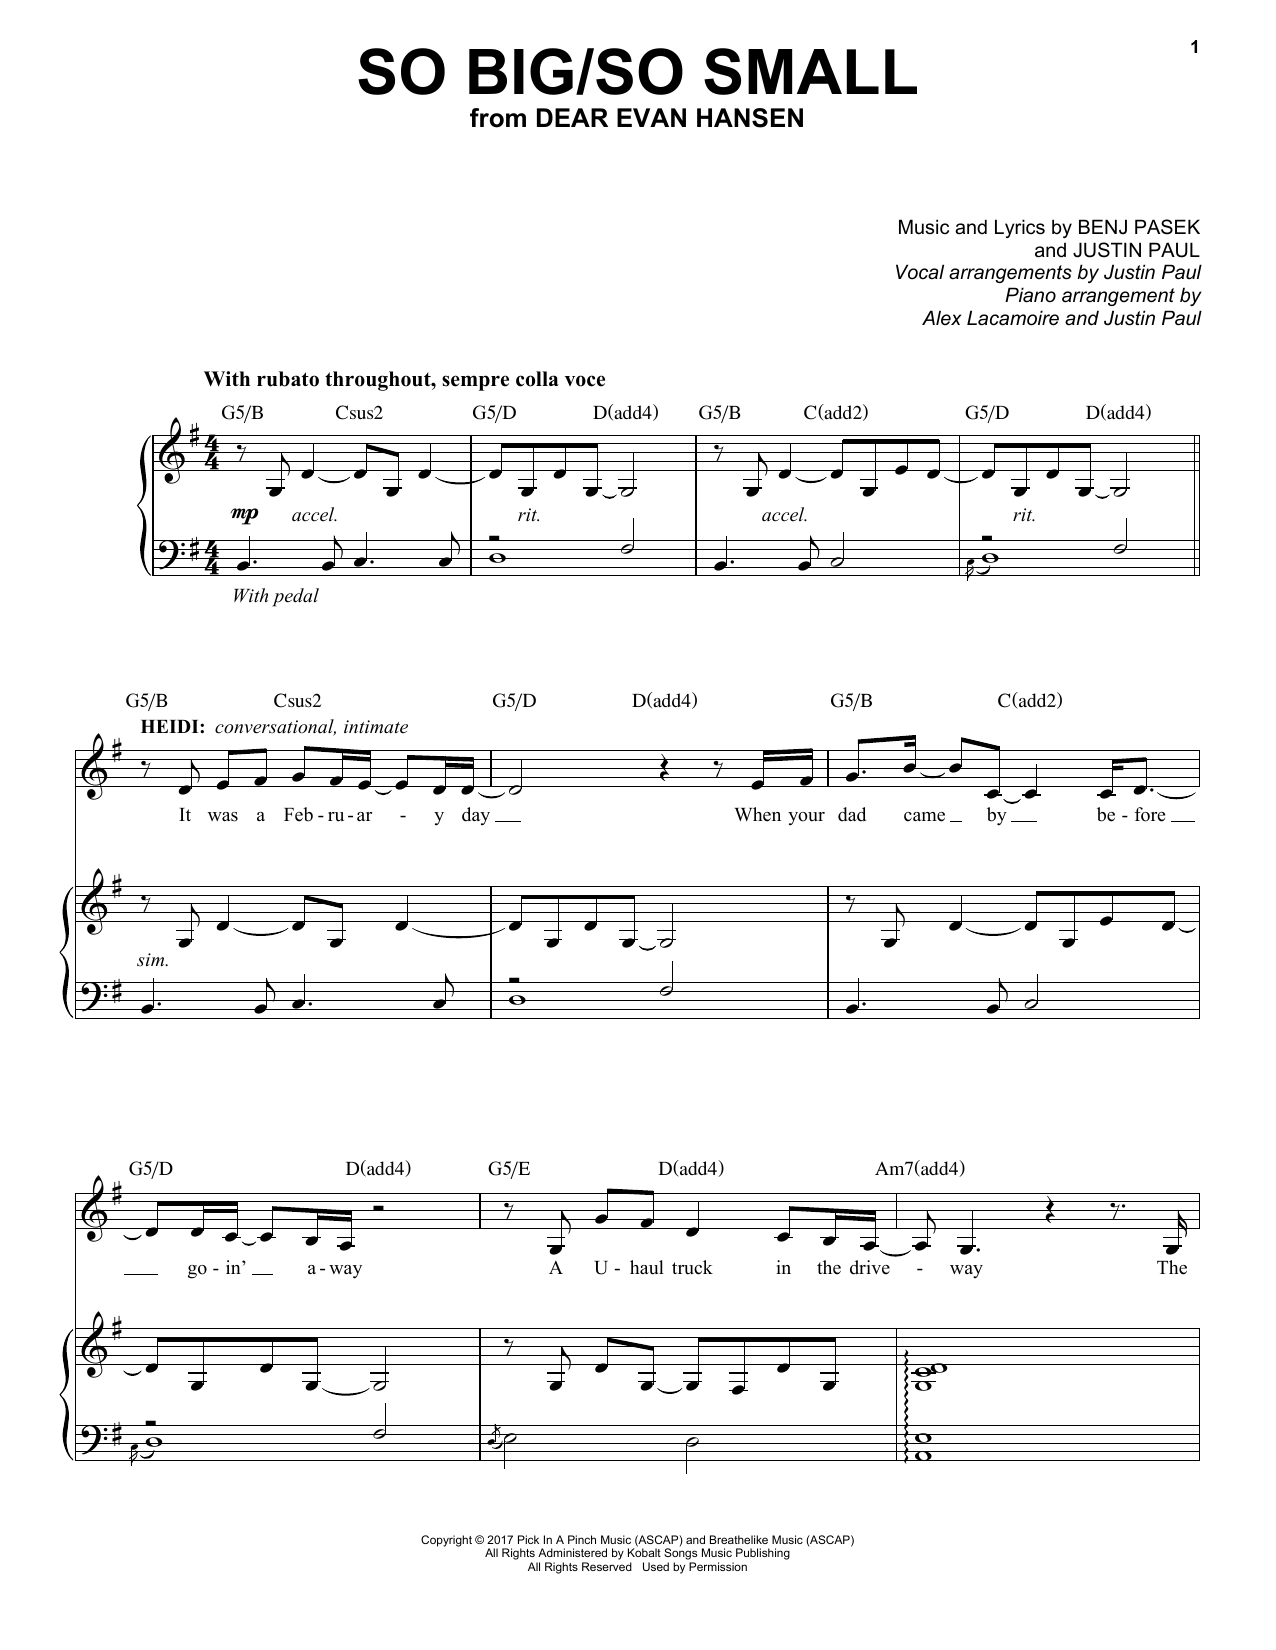 Pasek & Paul So Big/So Small (from Dear Evan Hansen) sheet music notes and chords arranged for Guitar Chords/Lyrics